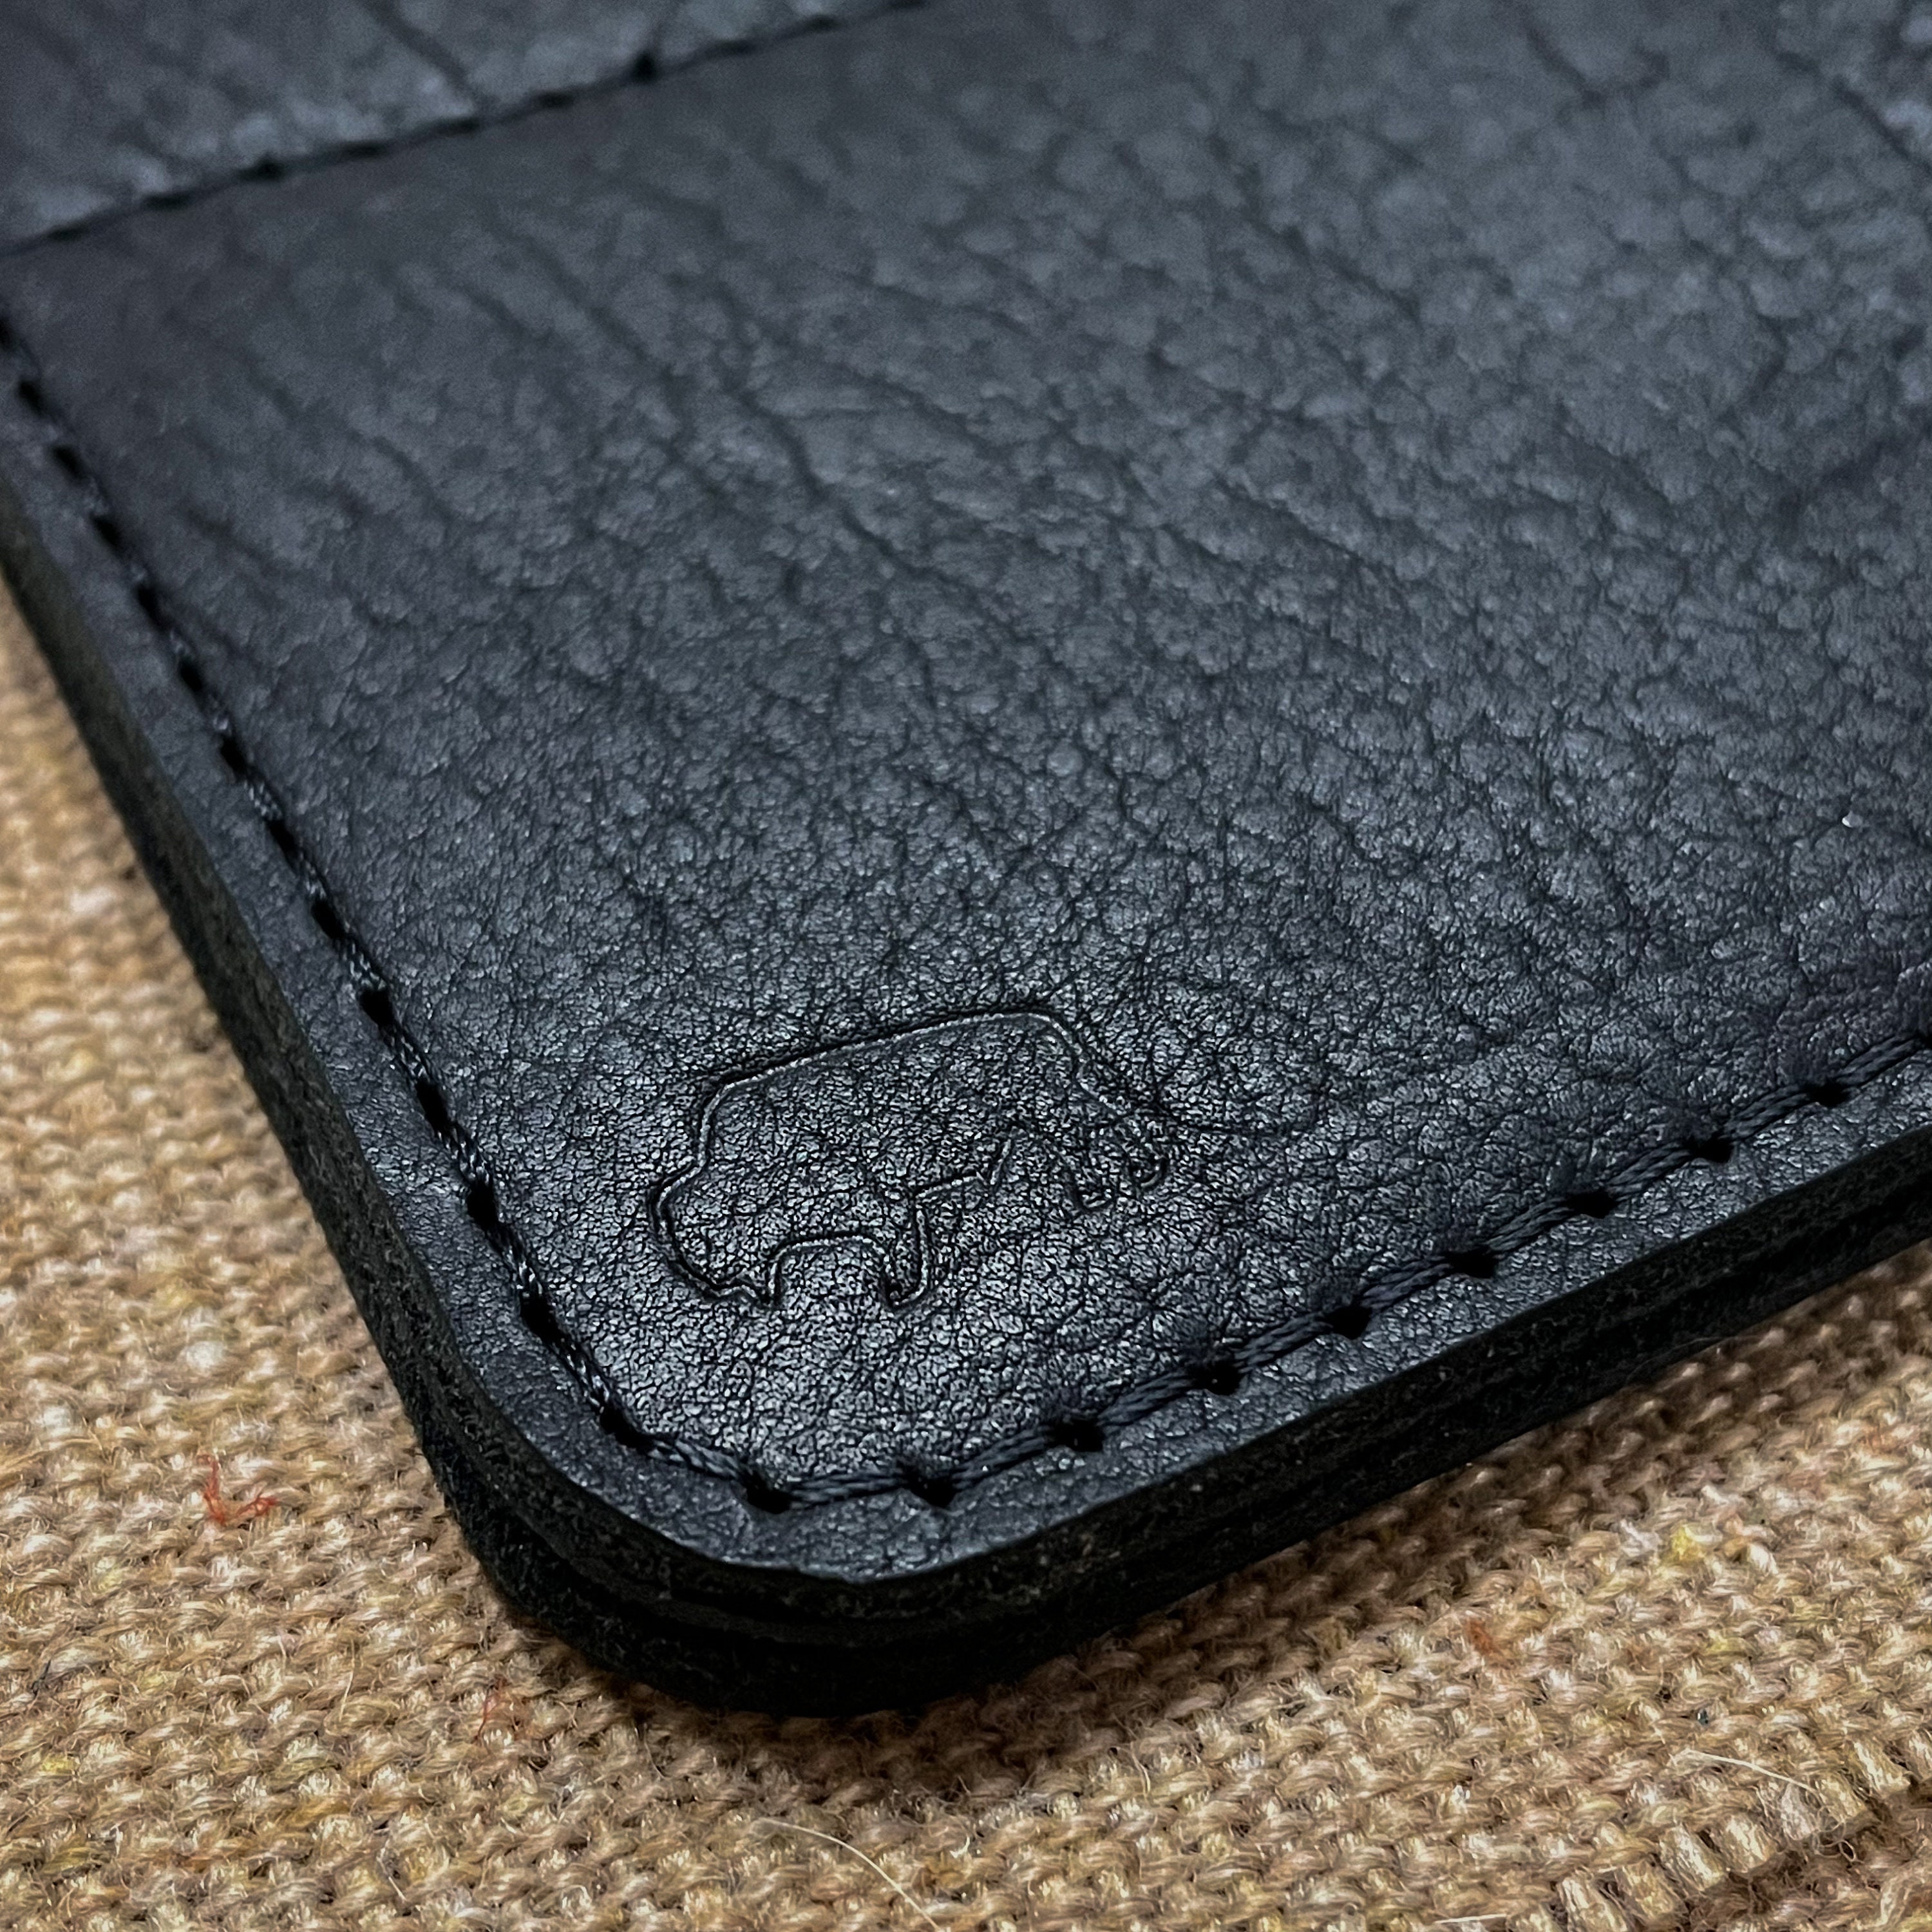 Buffalo Leather Passport Wallet - Black